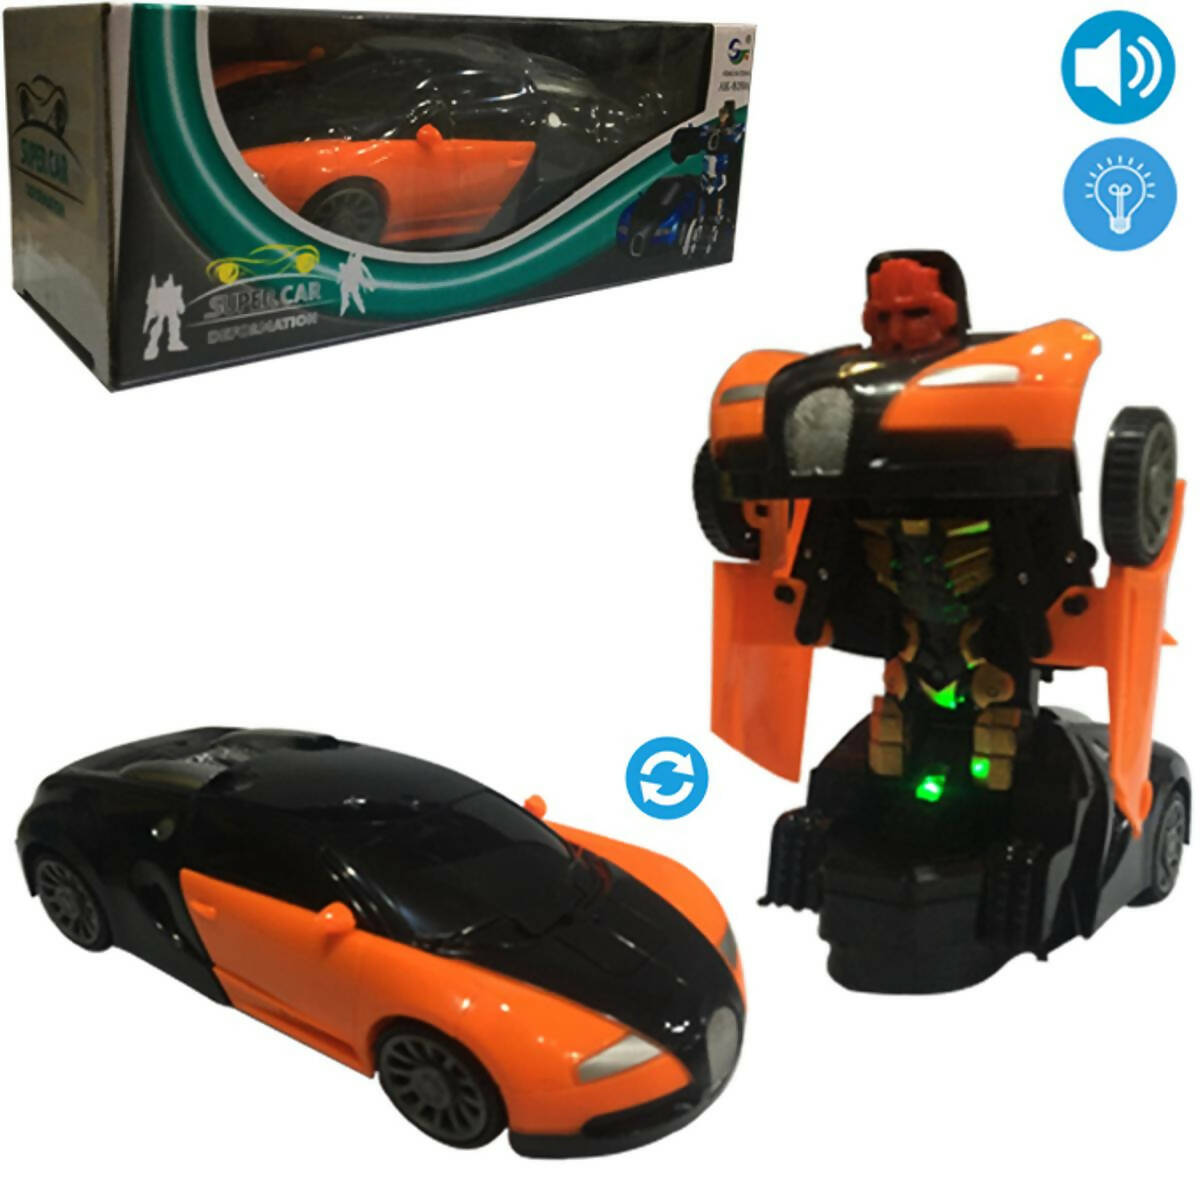 Transformer Bugatti Robot Car - Light & Music - Orange